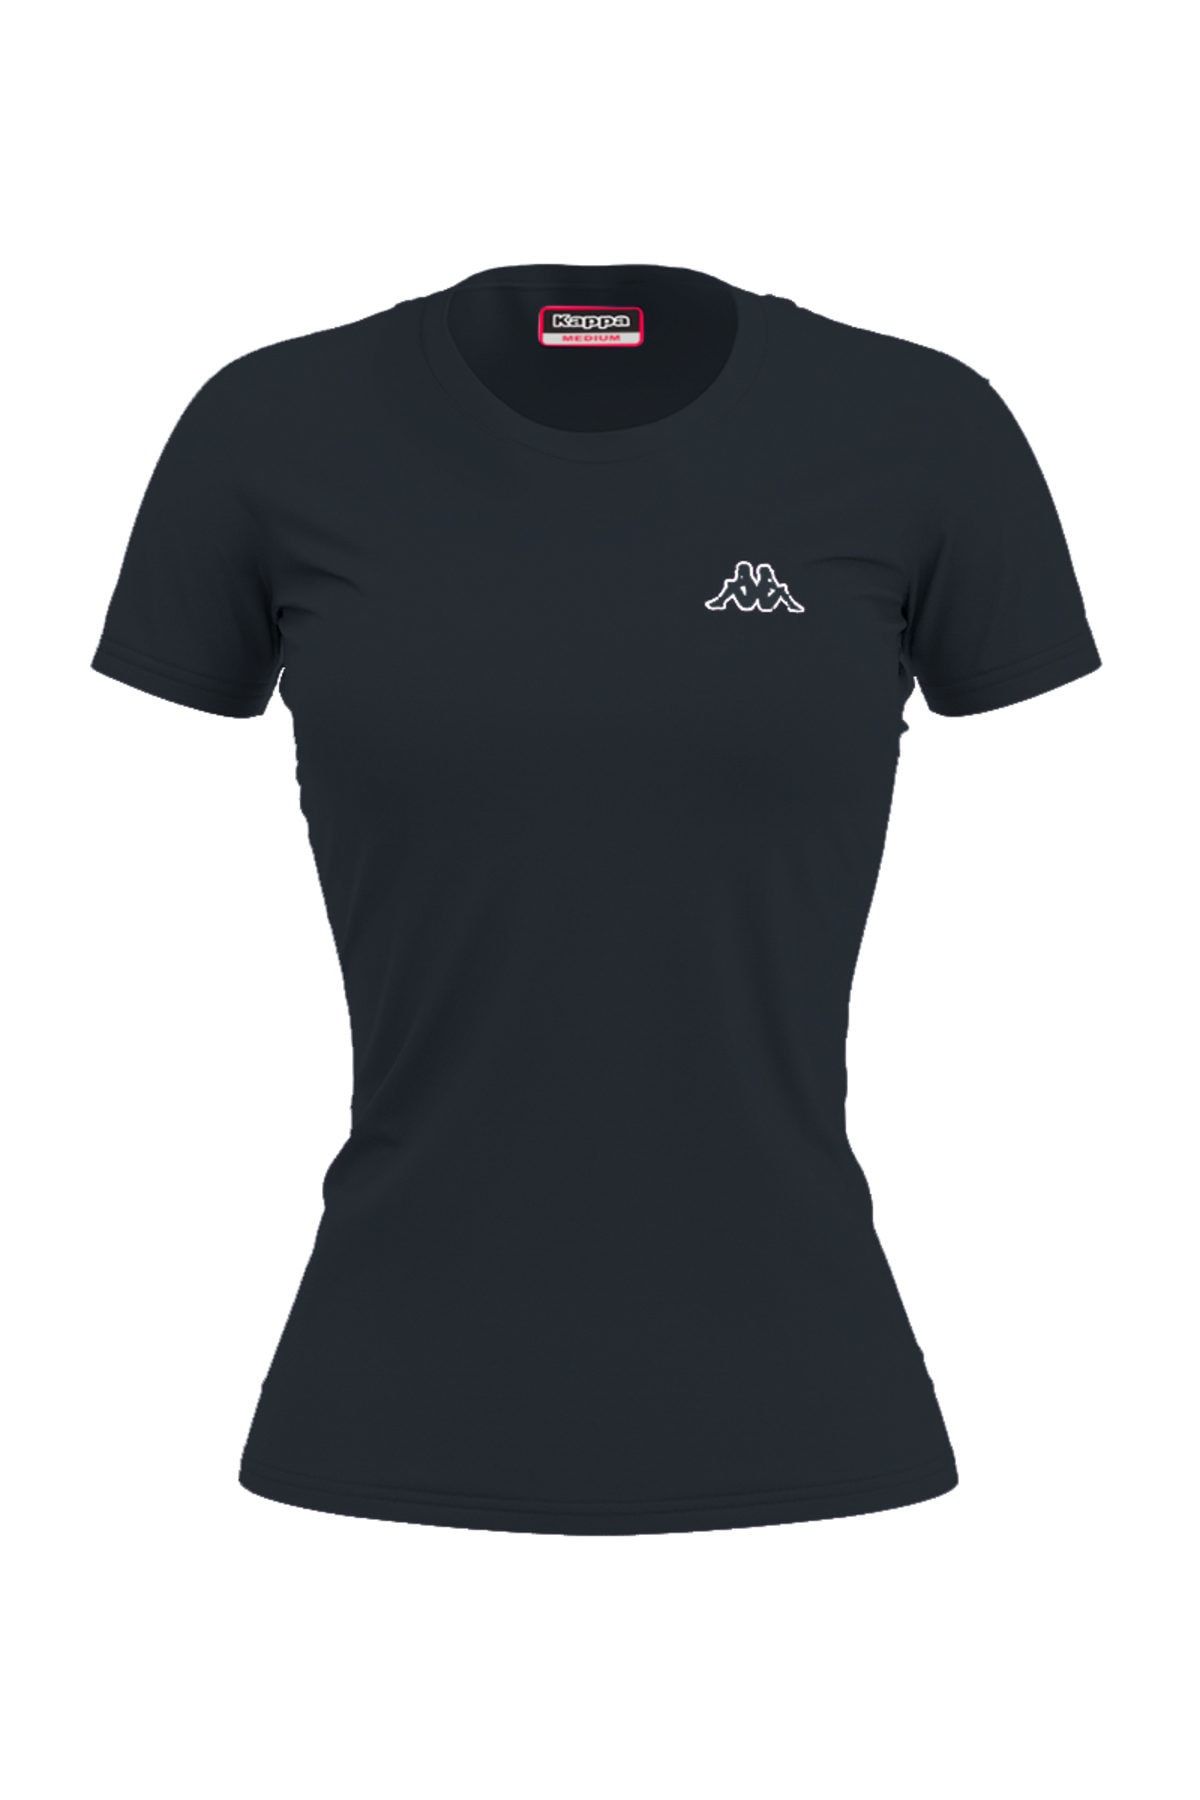 Kappa Kadın T-shirt - 130014B0821